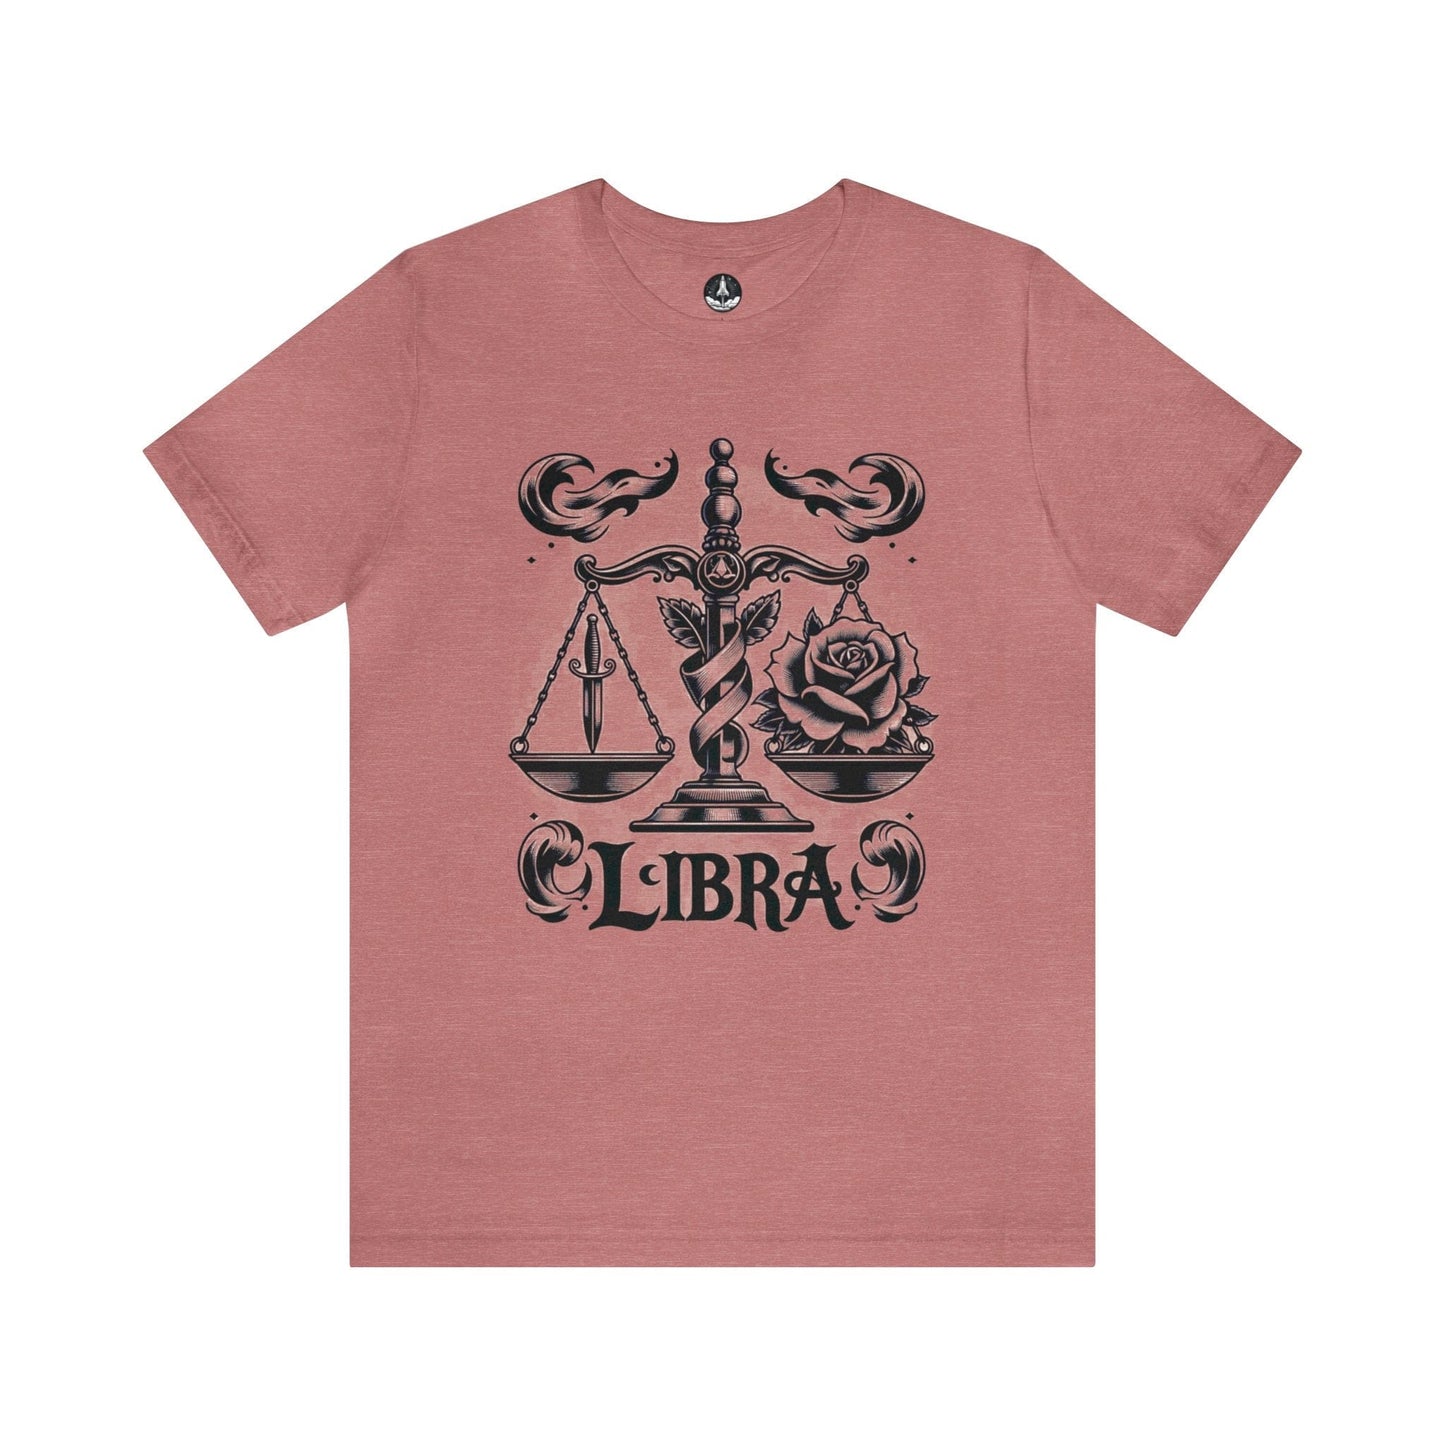 T-Shirt Heather Mauve / S Scales & Roses Libra T-Shirt